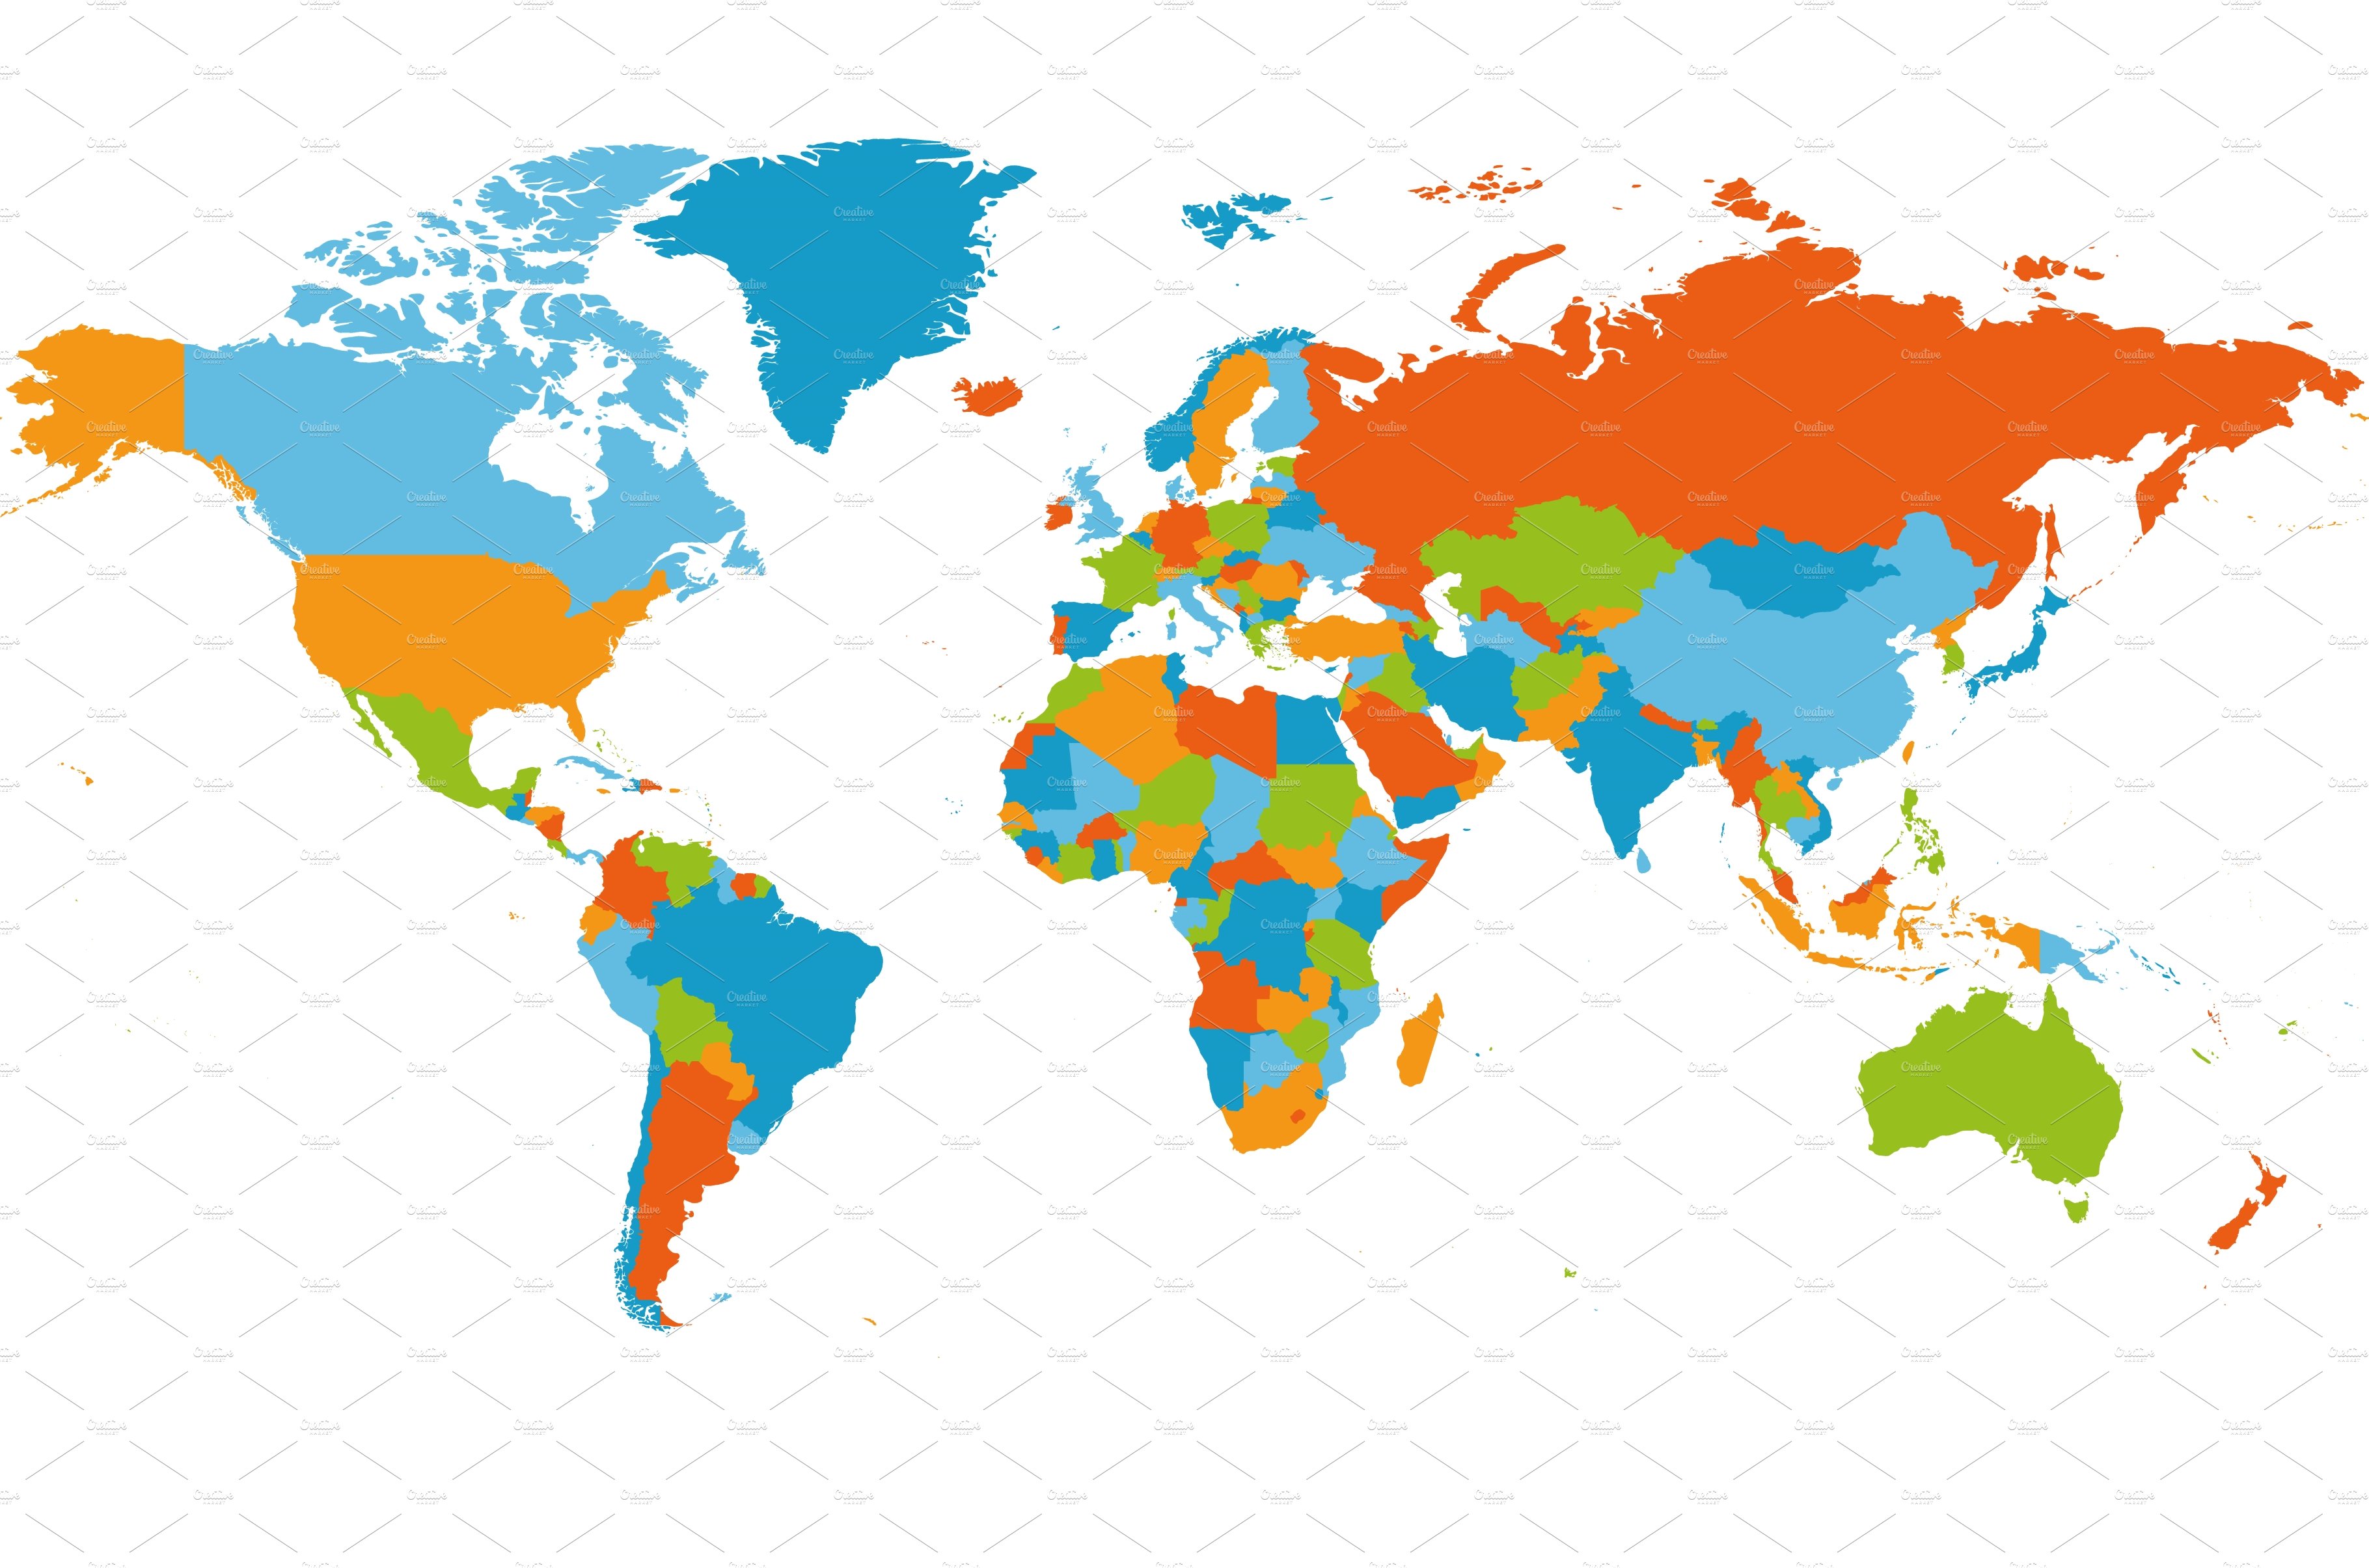 World Map High Detailed Blank By Petr Polák On Dribbble